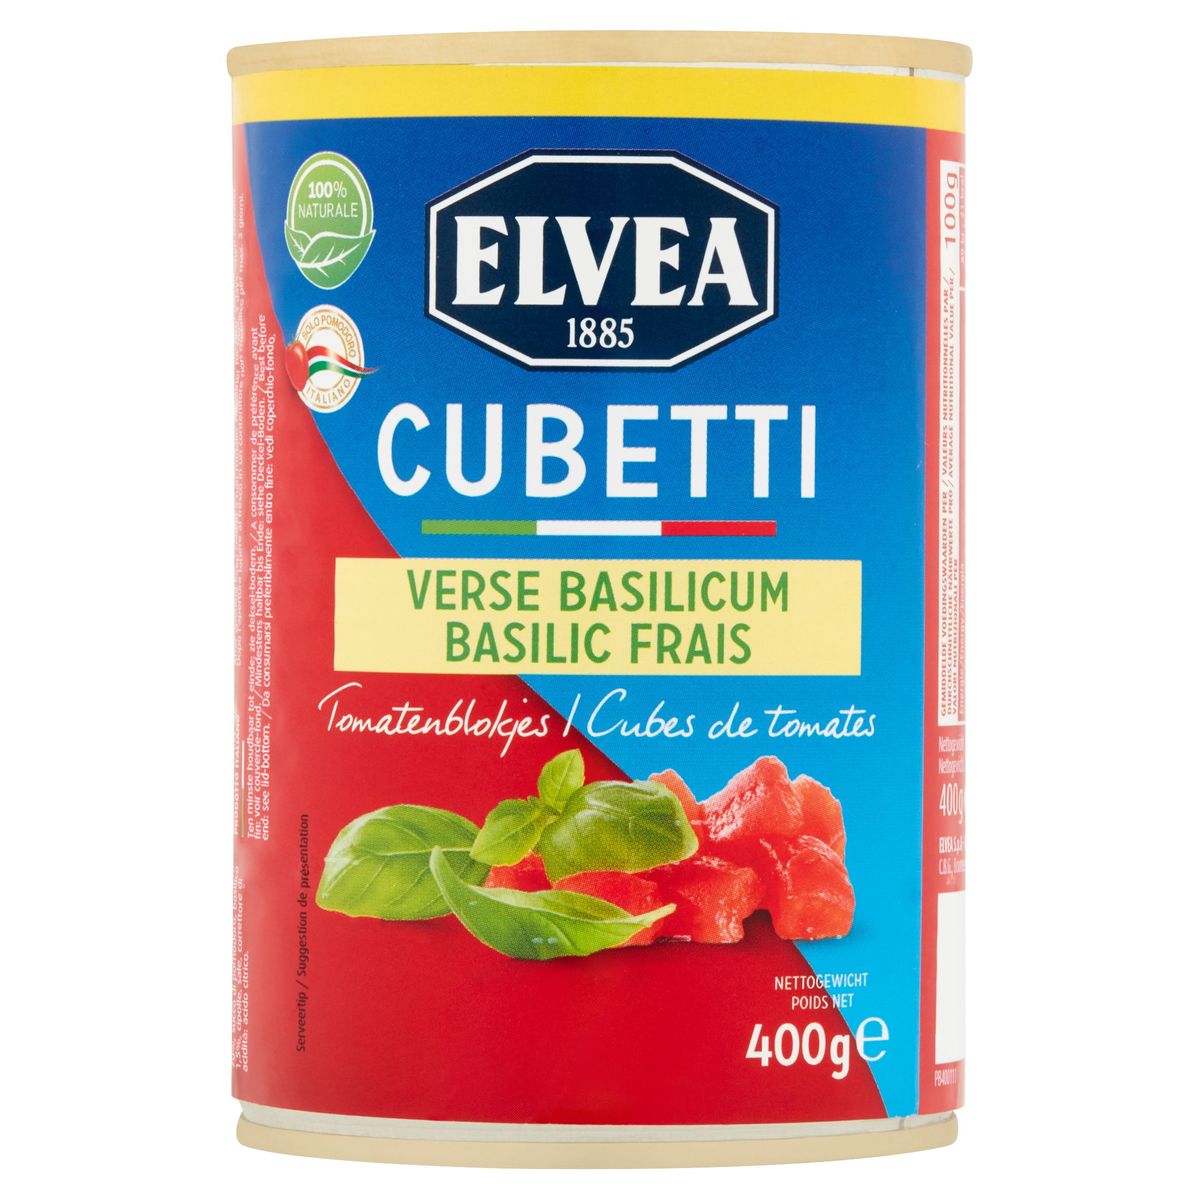 Elvea Cubetti Basilic Frais Cubes de Tomates 400 g